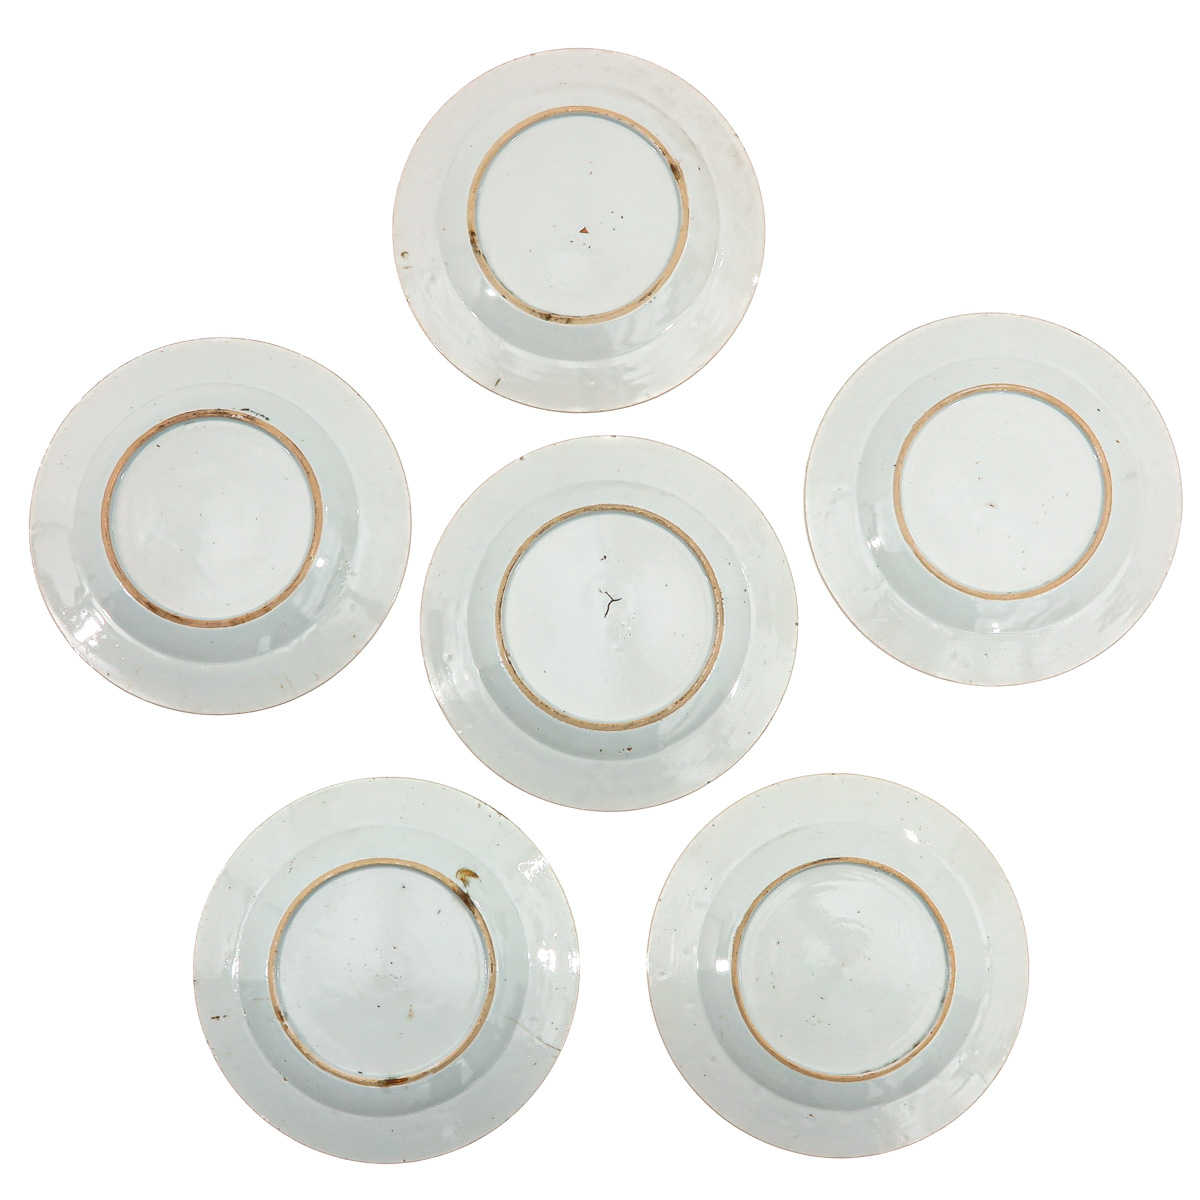 A Series of 6 Imari Plates - Image 2 of 10